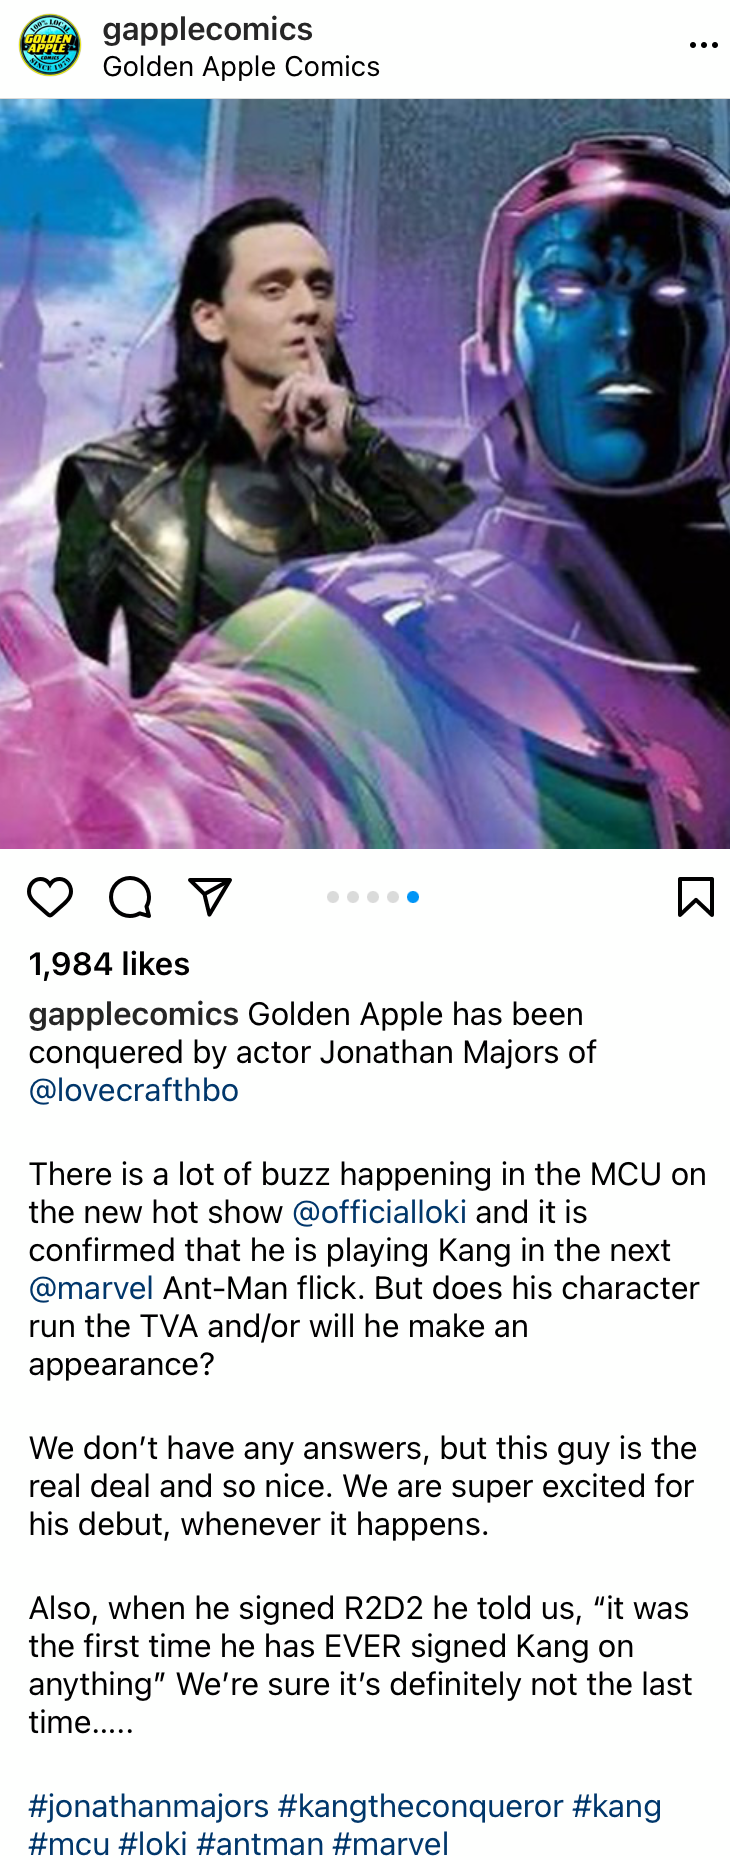 Jonathan Majors Visits Golden Apple Comics